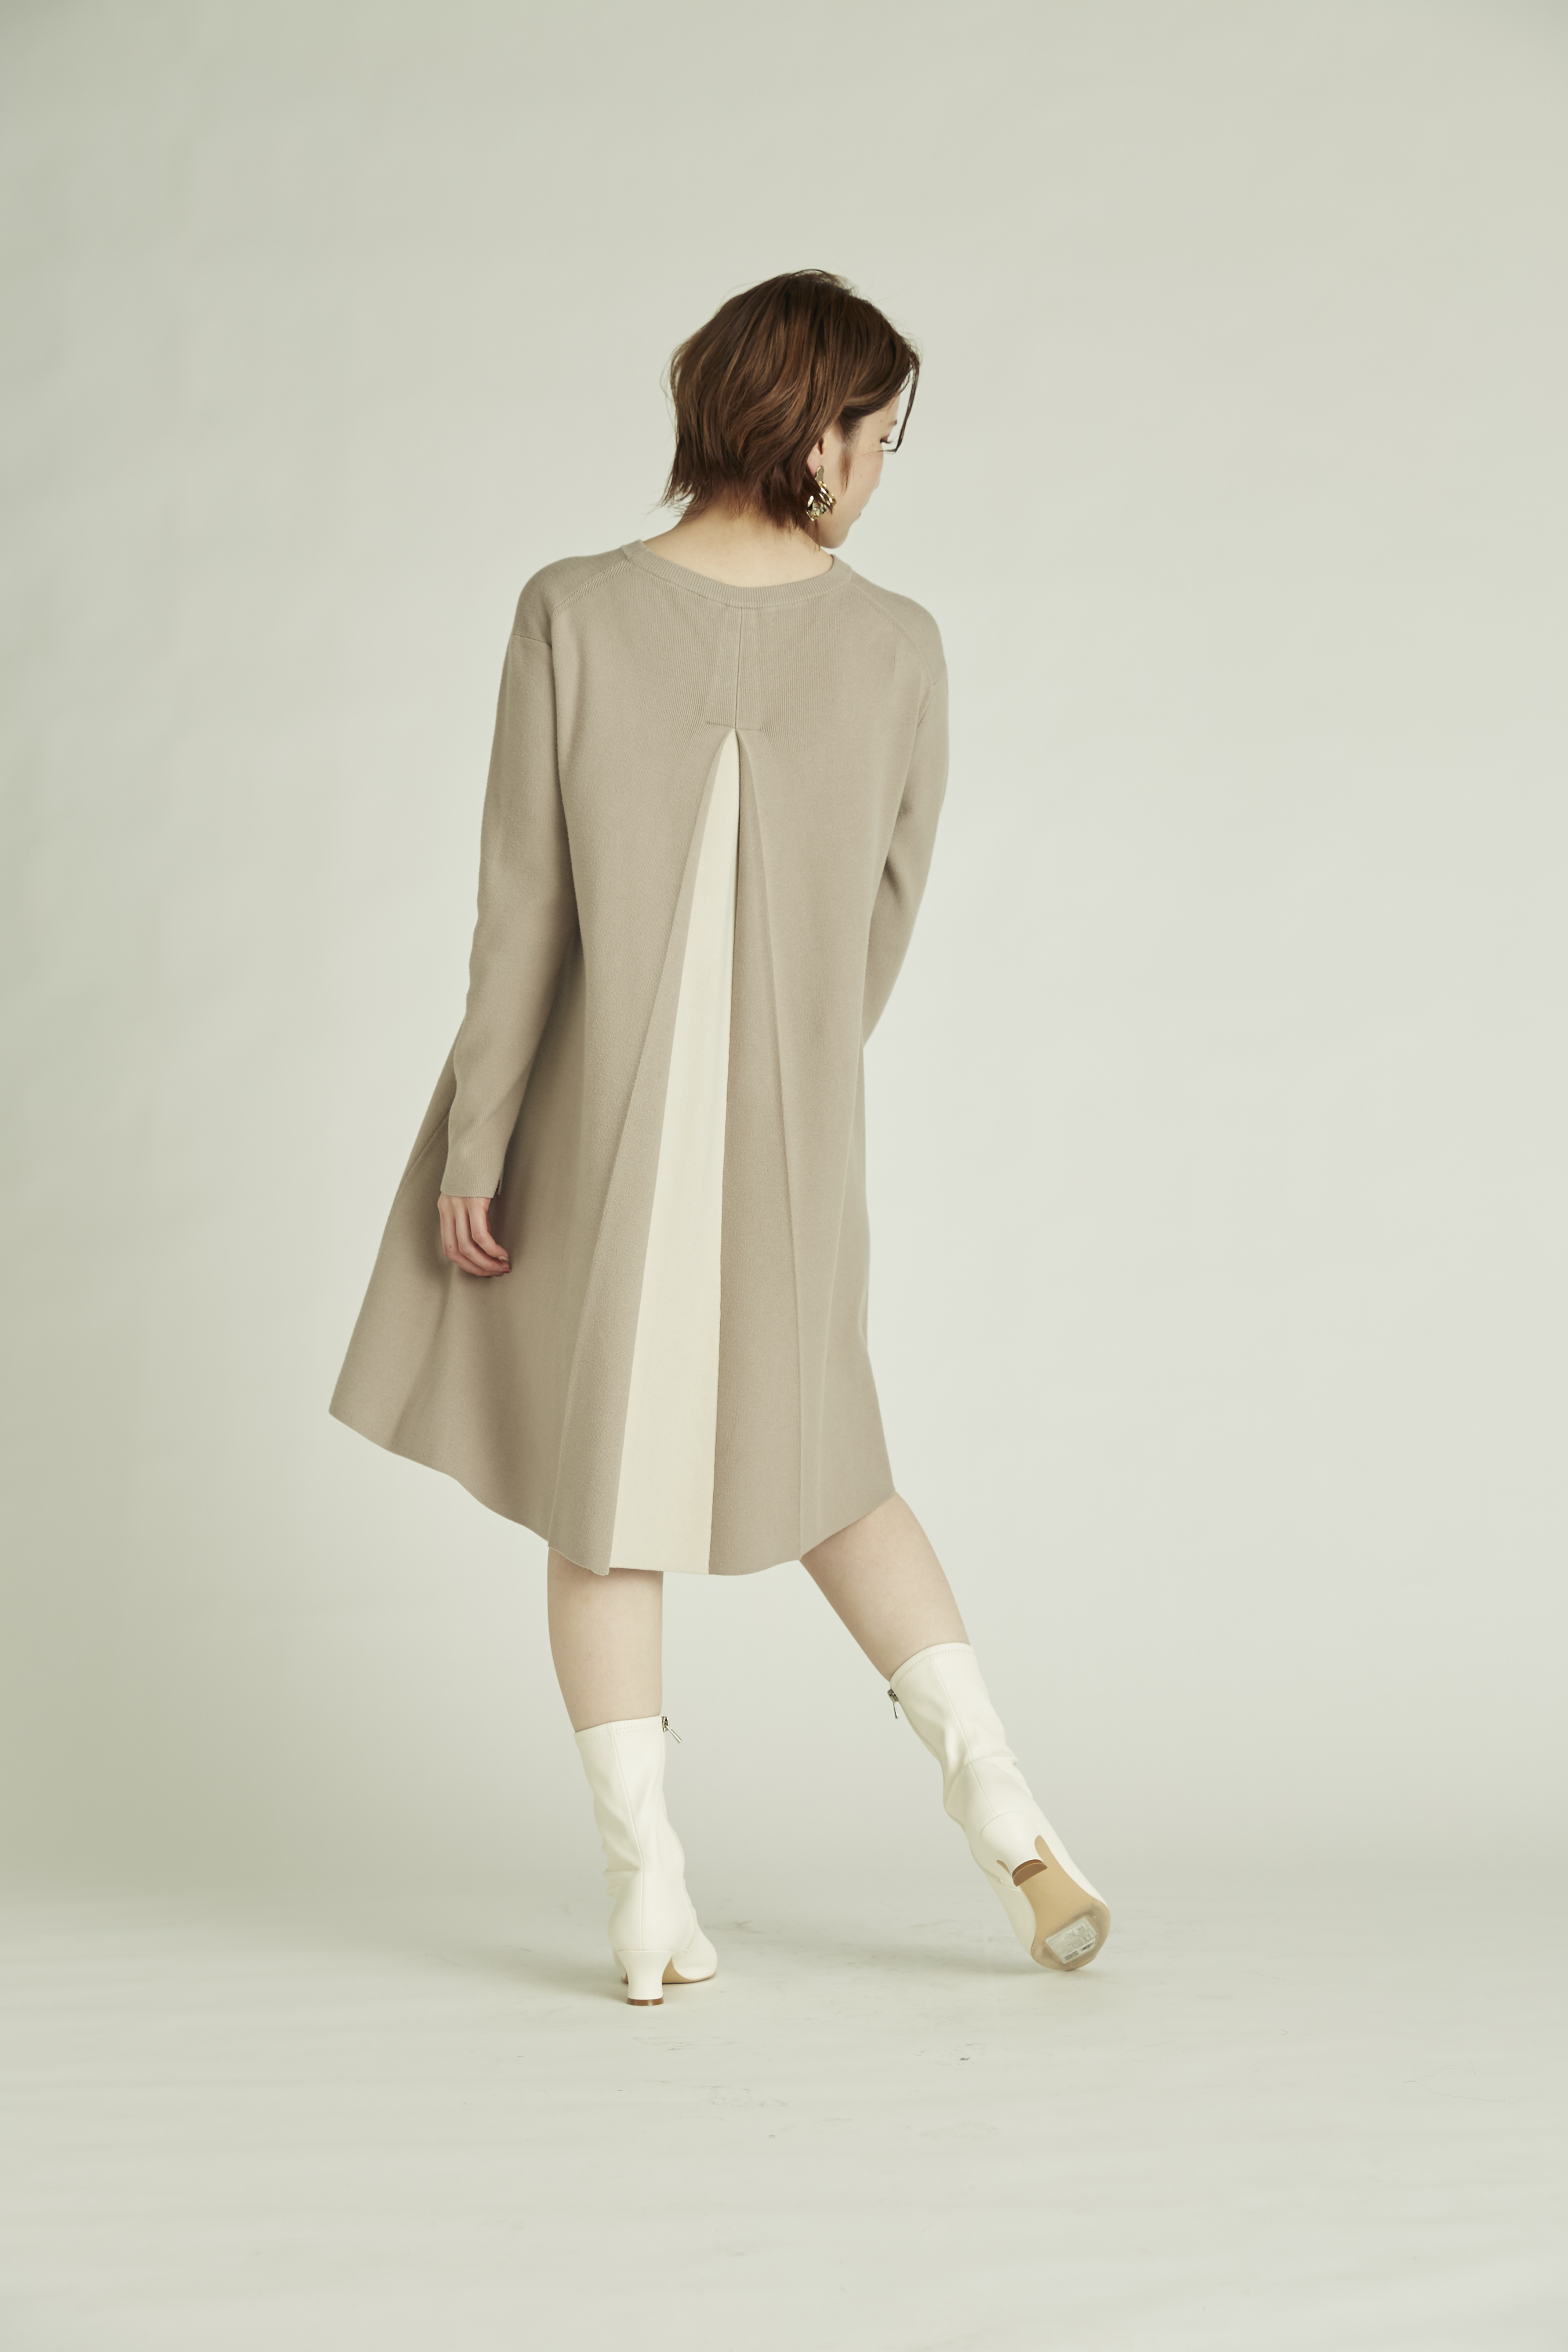 New Year Special Knit Dress バイカラーａラインニットワンピース ニットワンピース Dress ドレス Celford セルフォード の通販サイト 公式